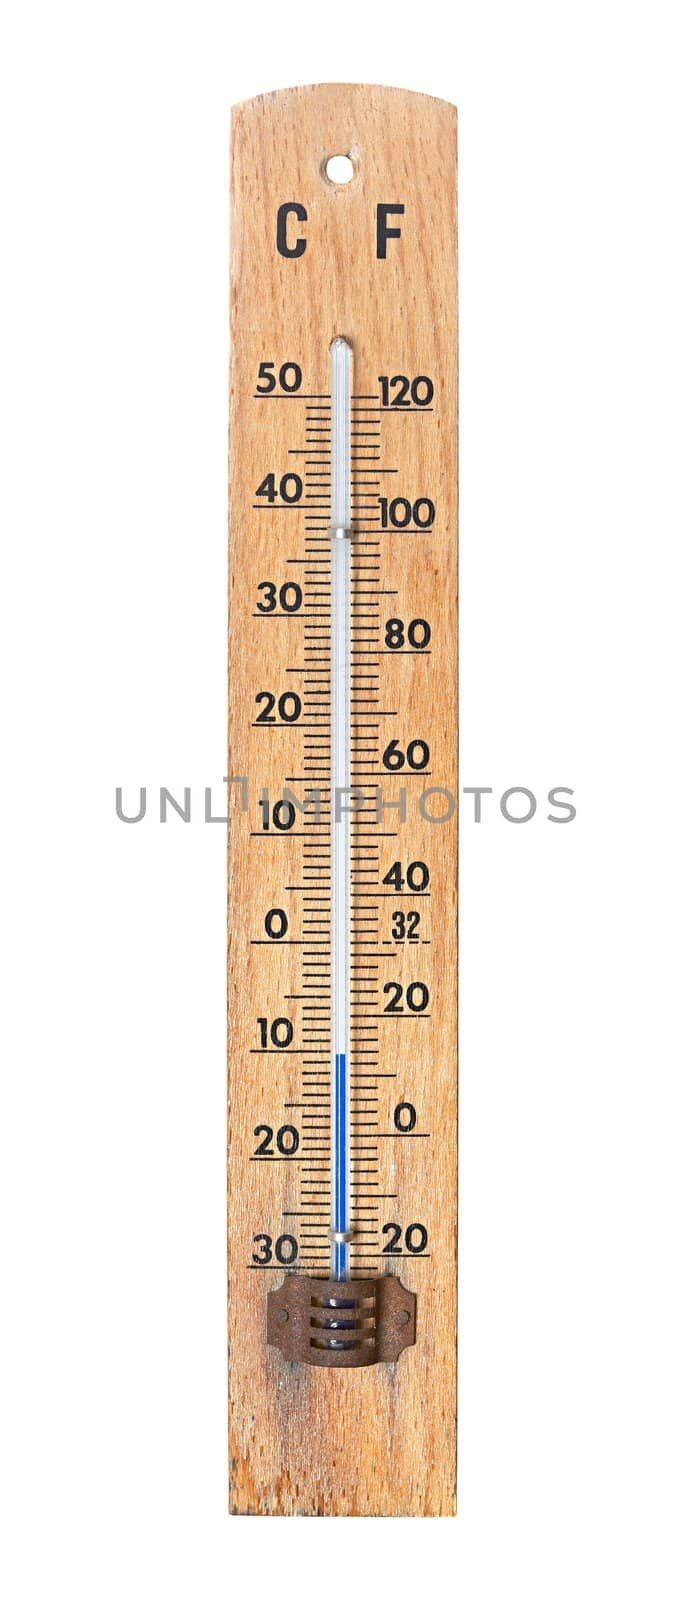 Thermometer by Gudella